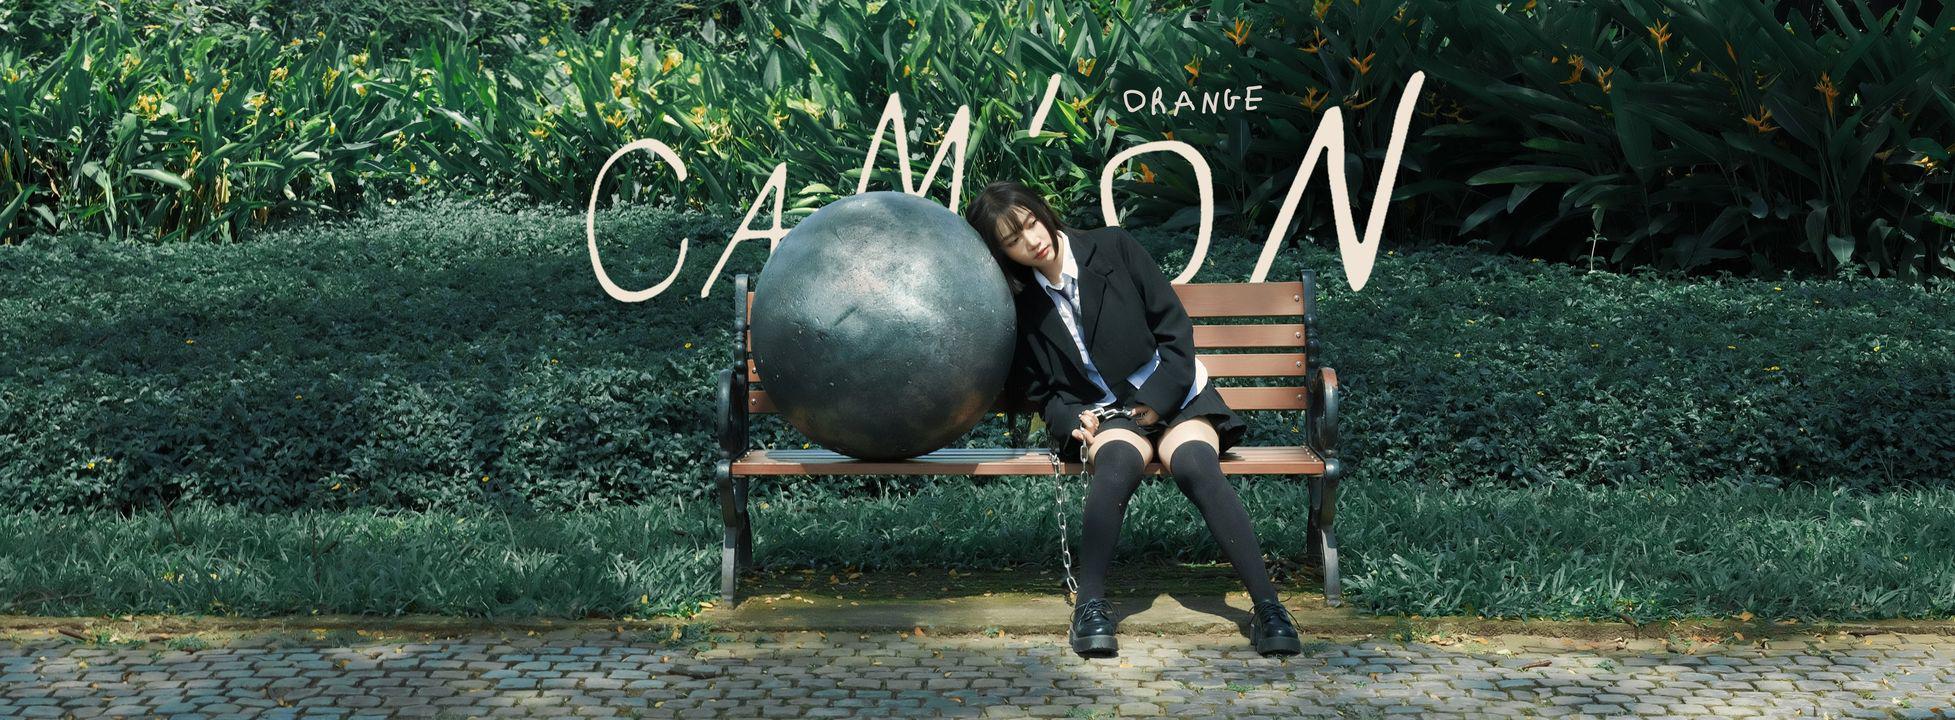 Cam’On là album đầu tay của Orange.